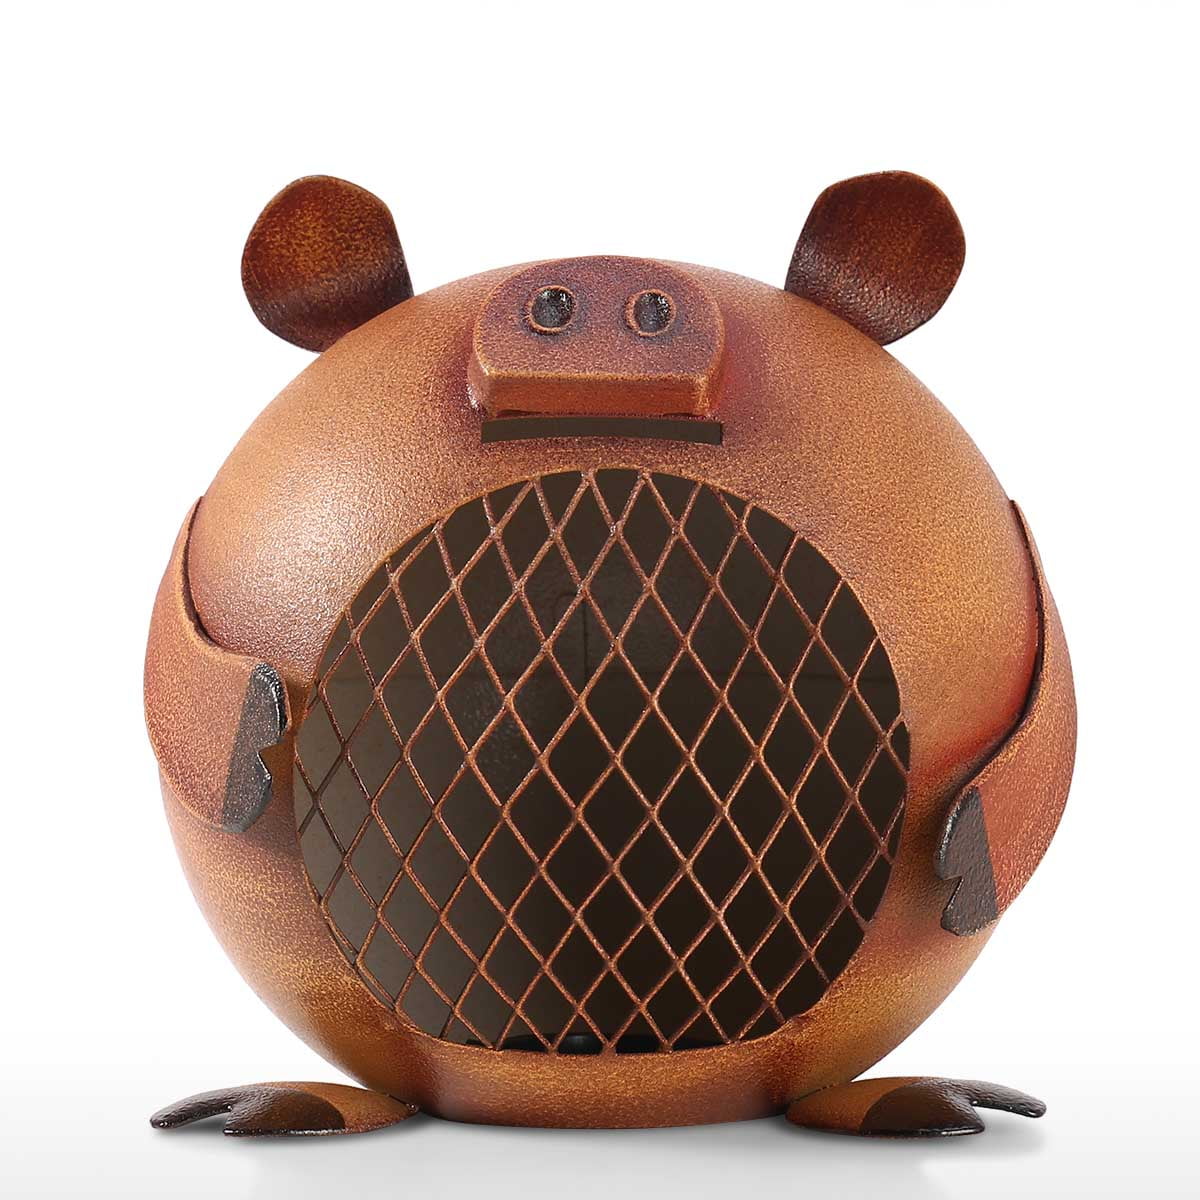 Tooarts Metal Coin Bank Money Box Cat Animals Shaped Piggy Bank Handwork Crafting Art